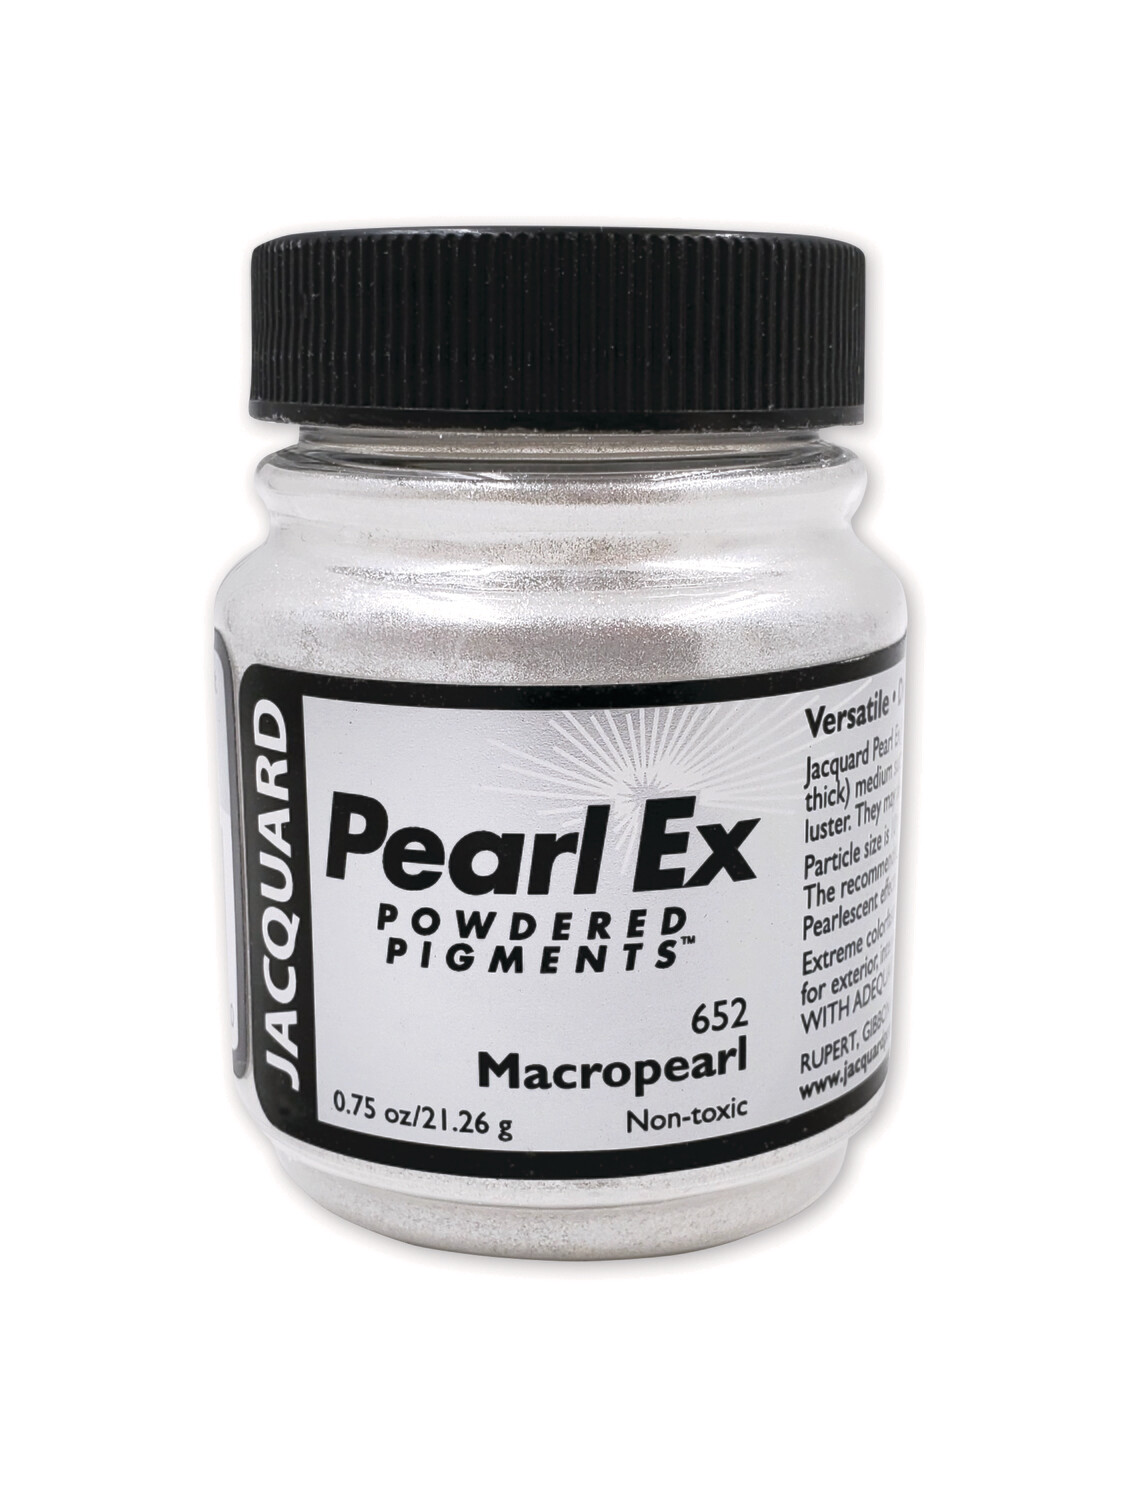 Pearl Ex Powdered Pigments-Macropearl